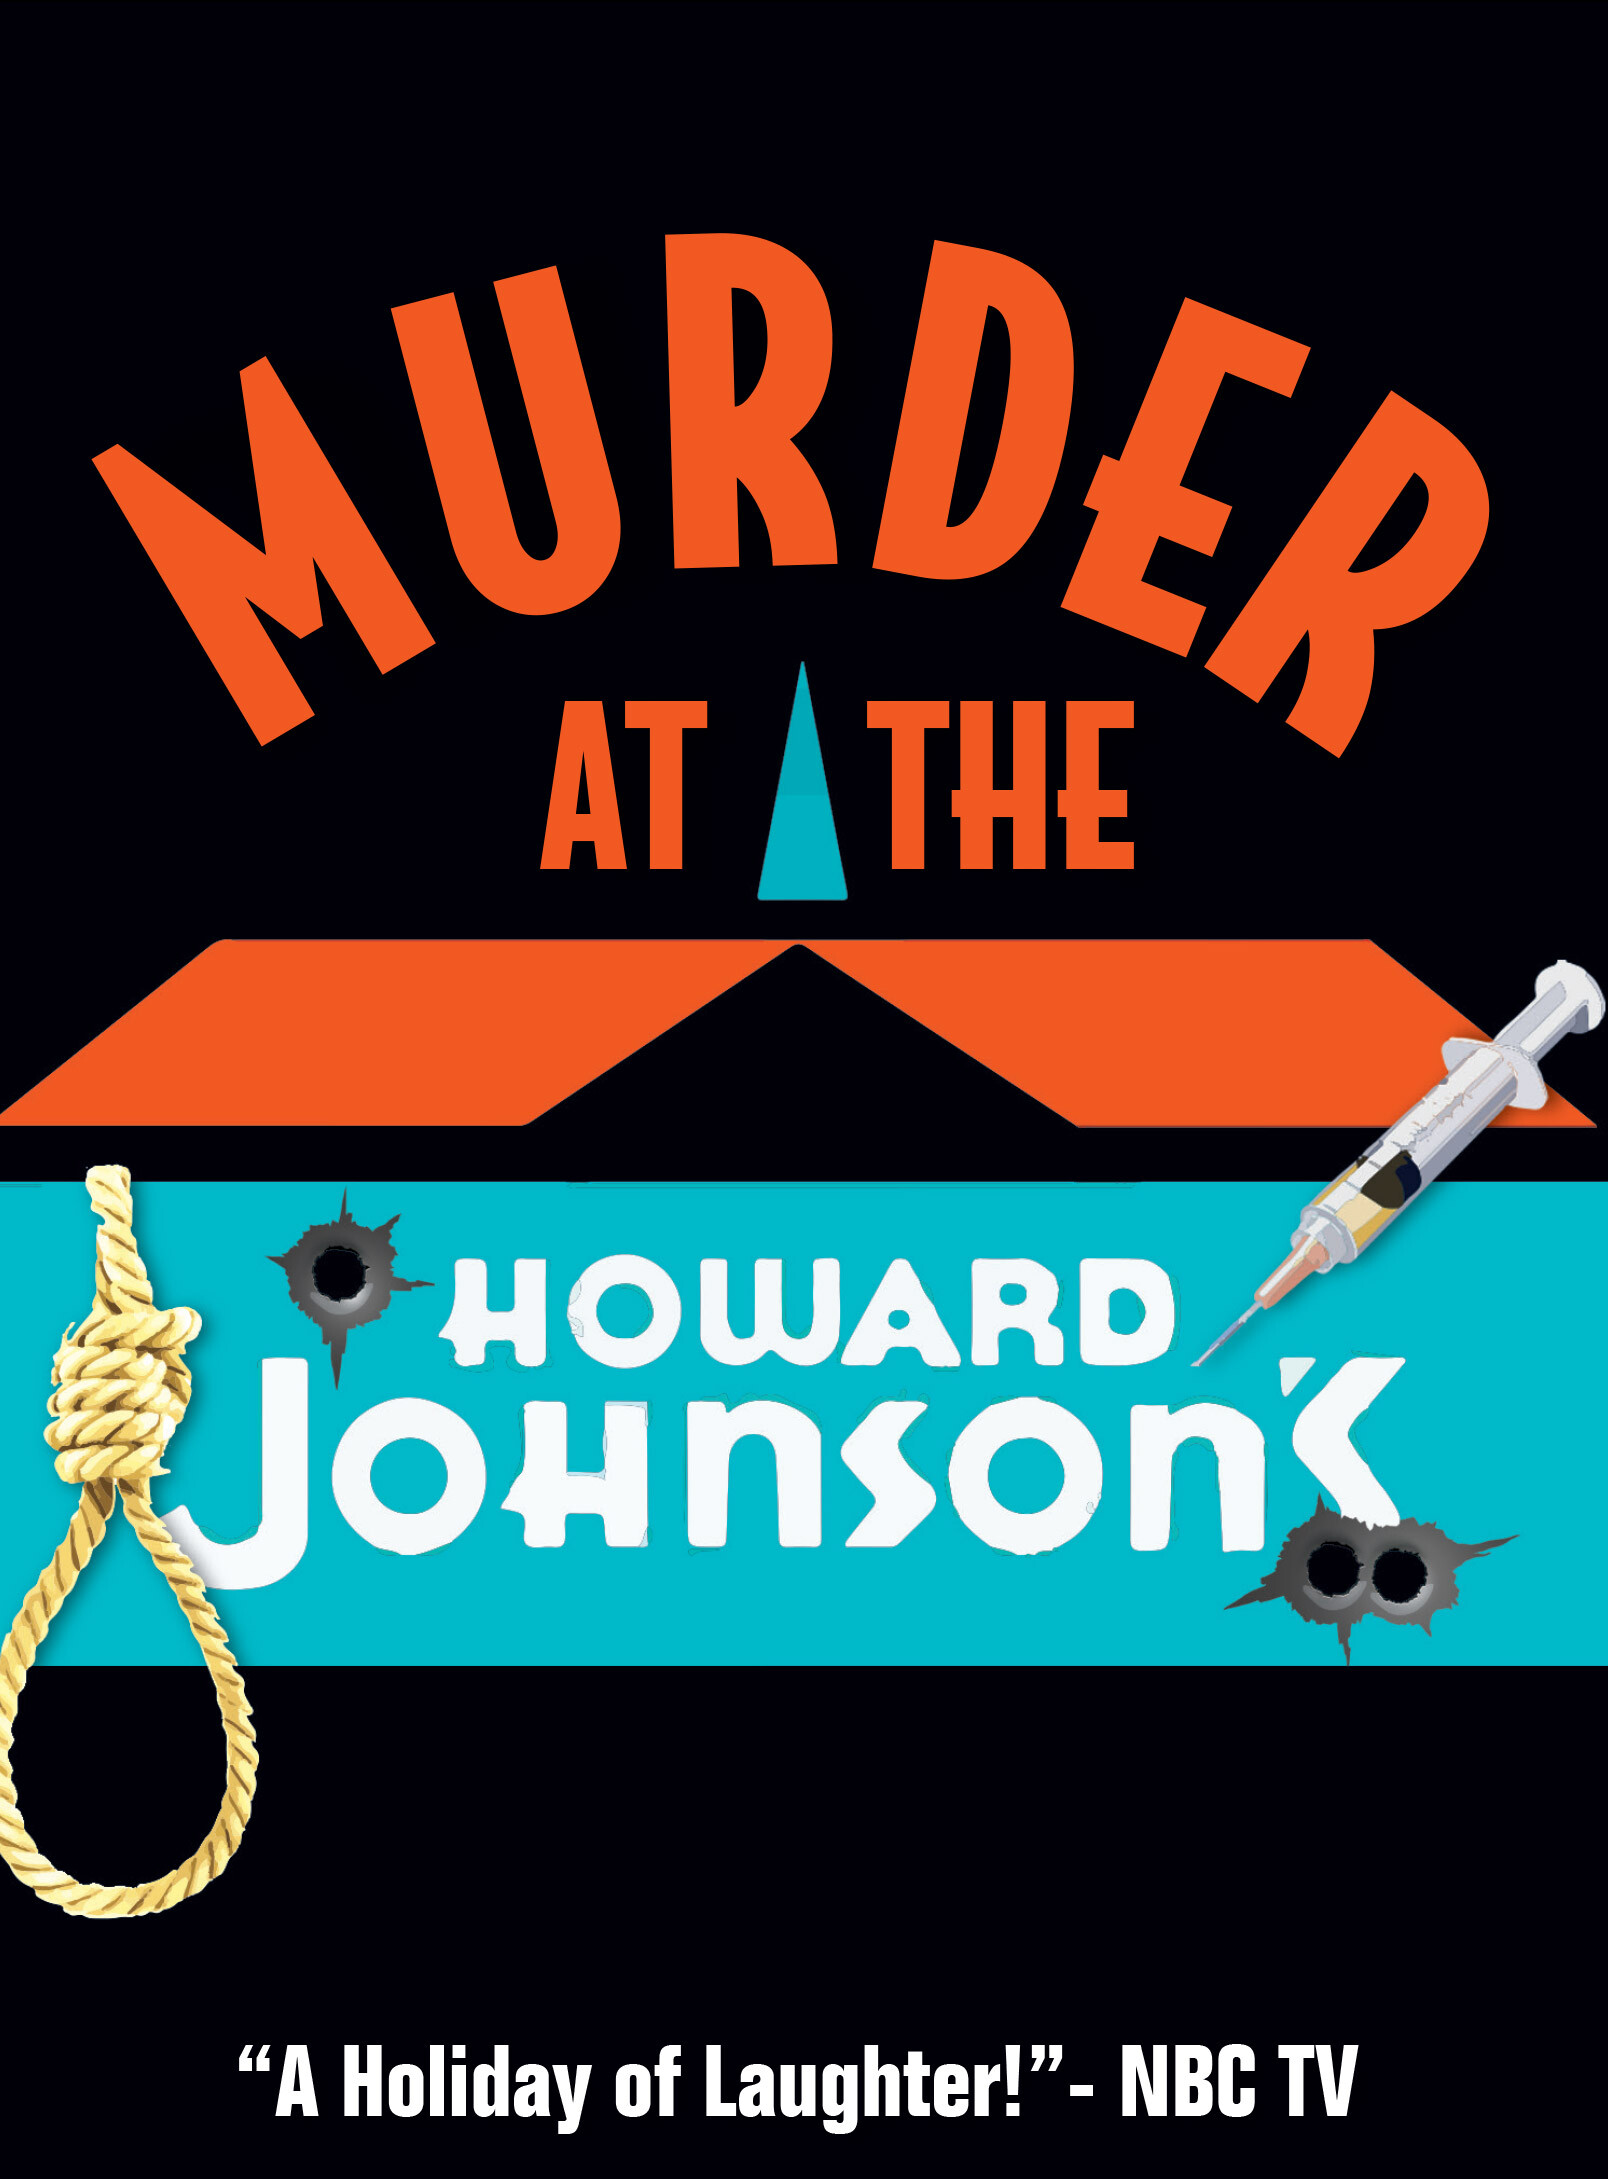 The Murder at the Howard Johnson's By Ron Clark & Sam Bobrick